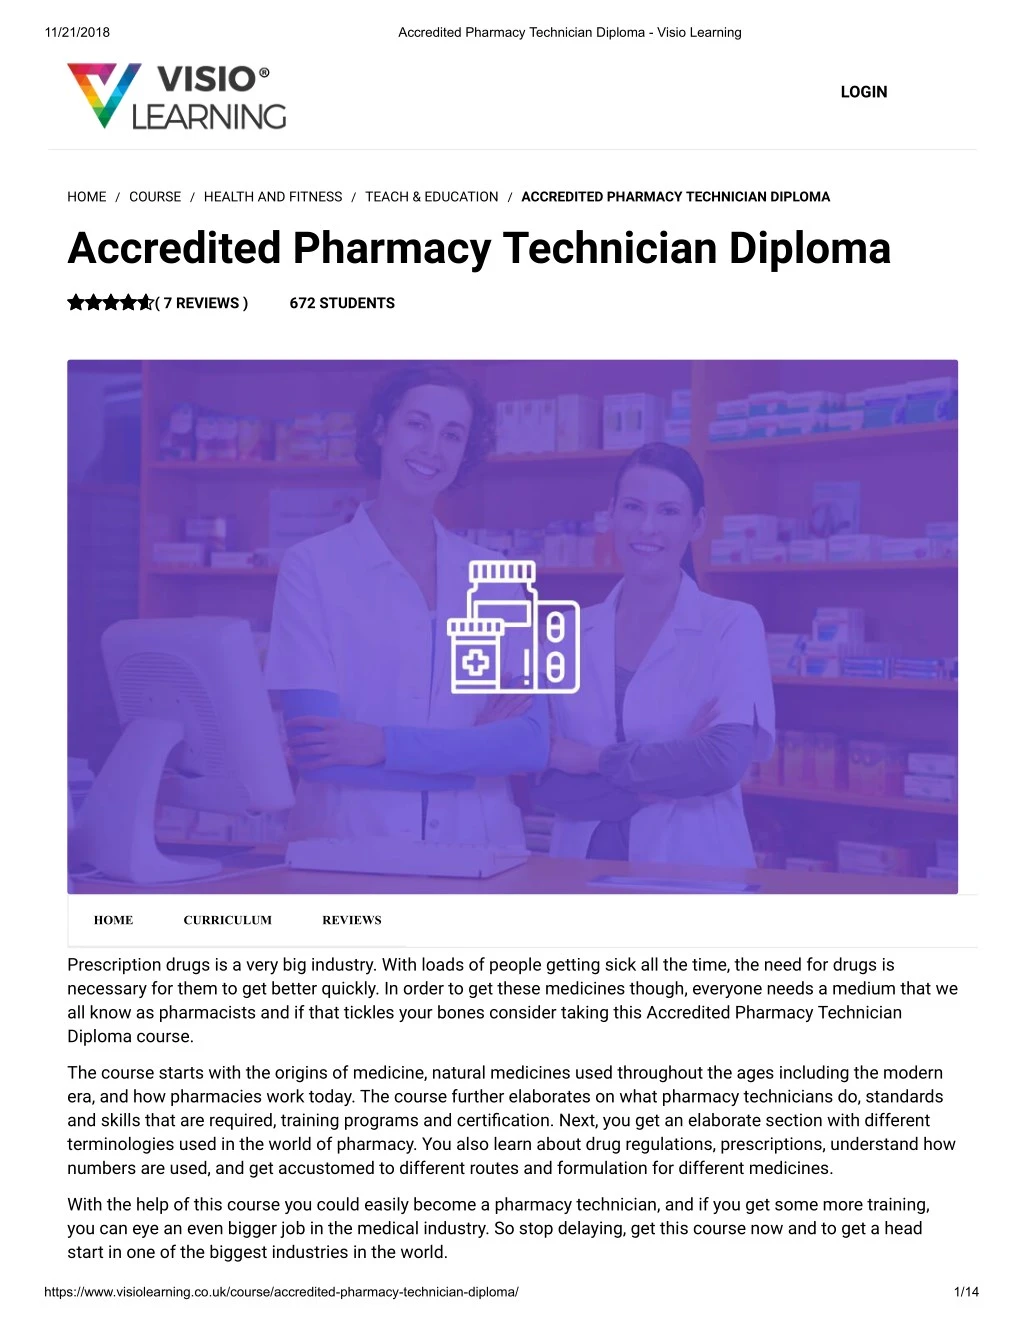 pharmacy technician course